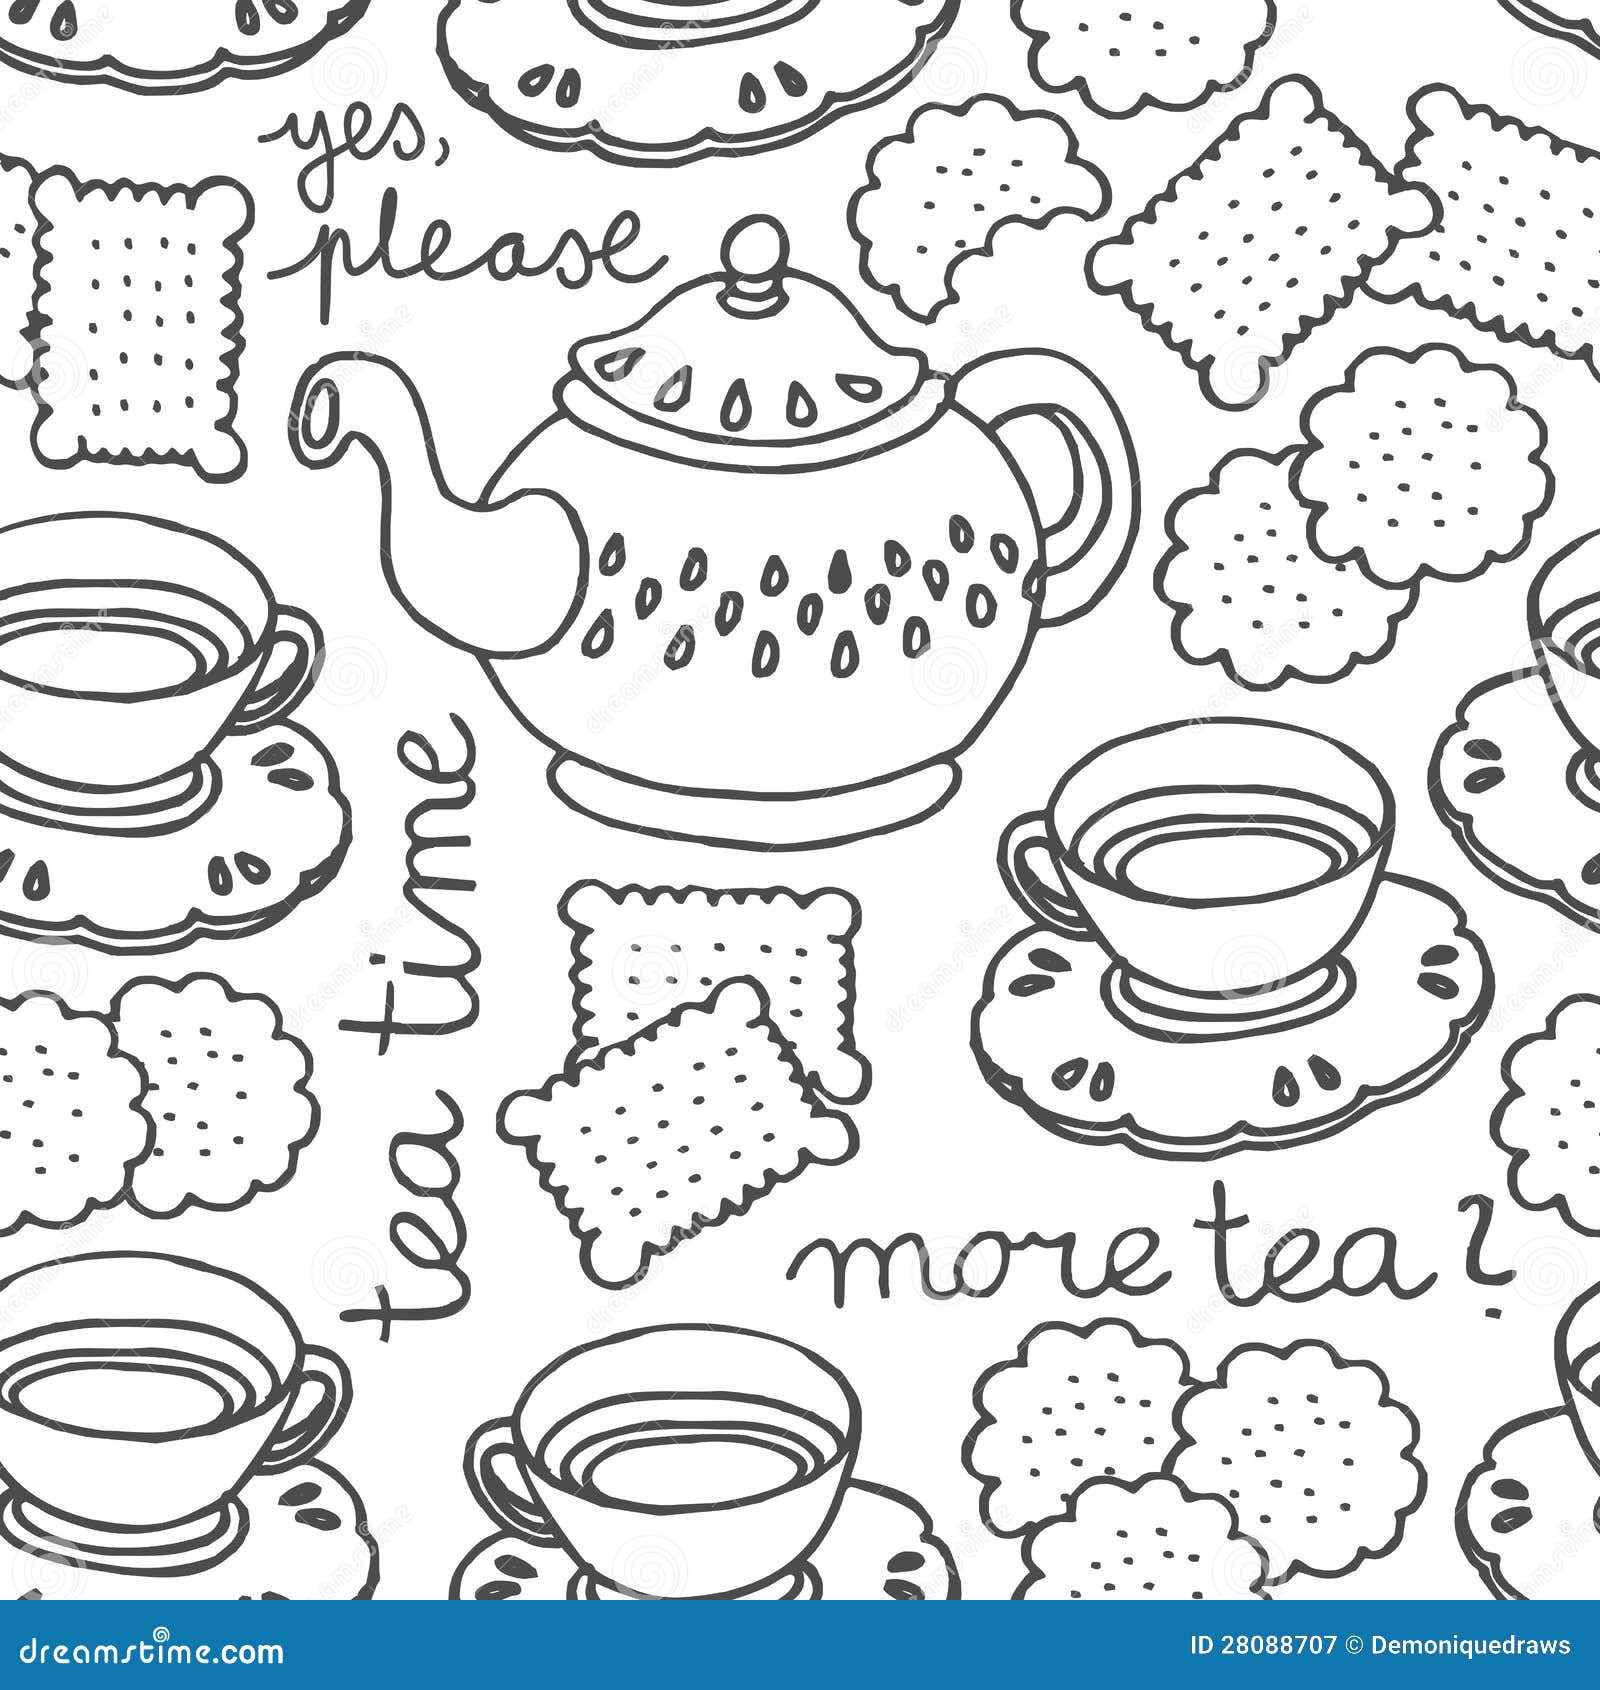 tea time monochrome seamless pattern